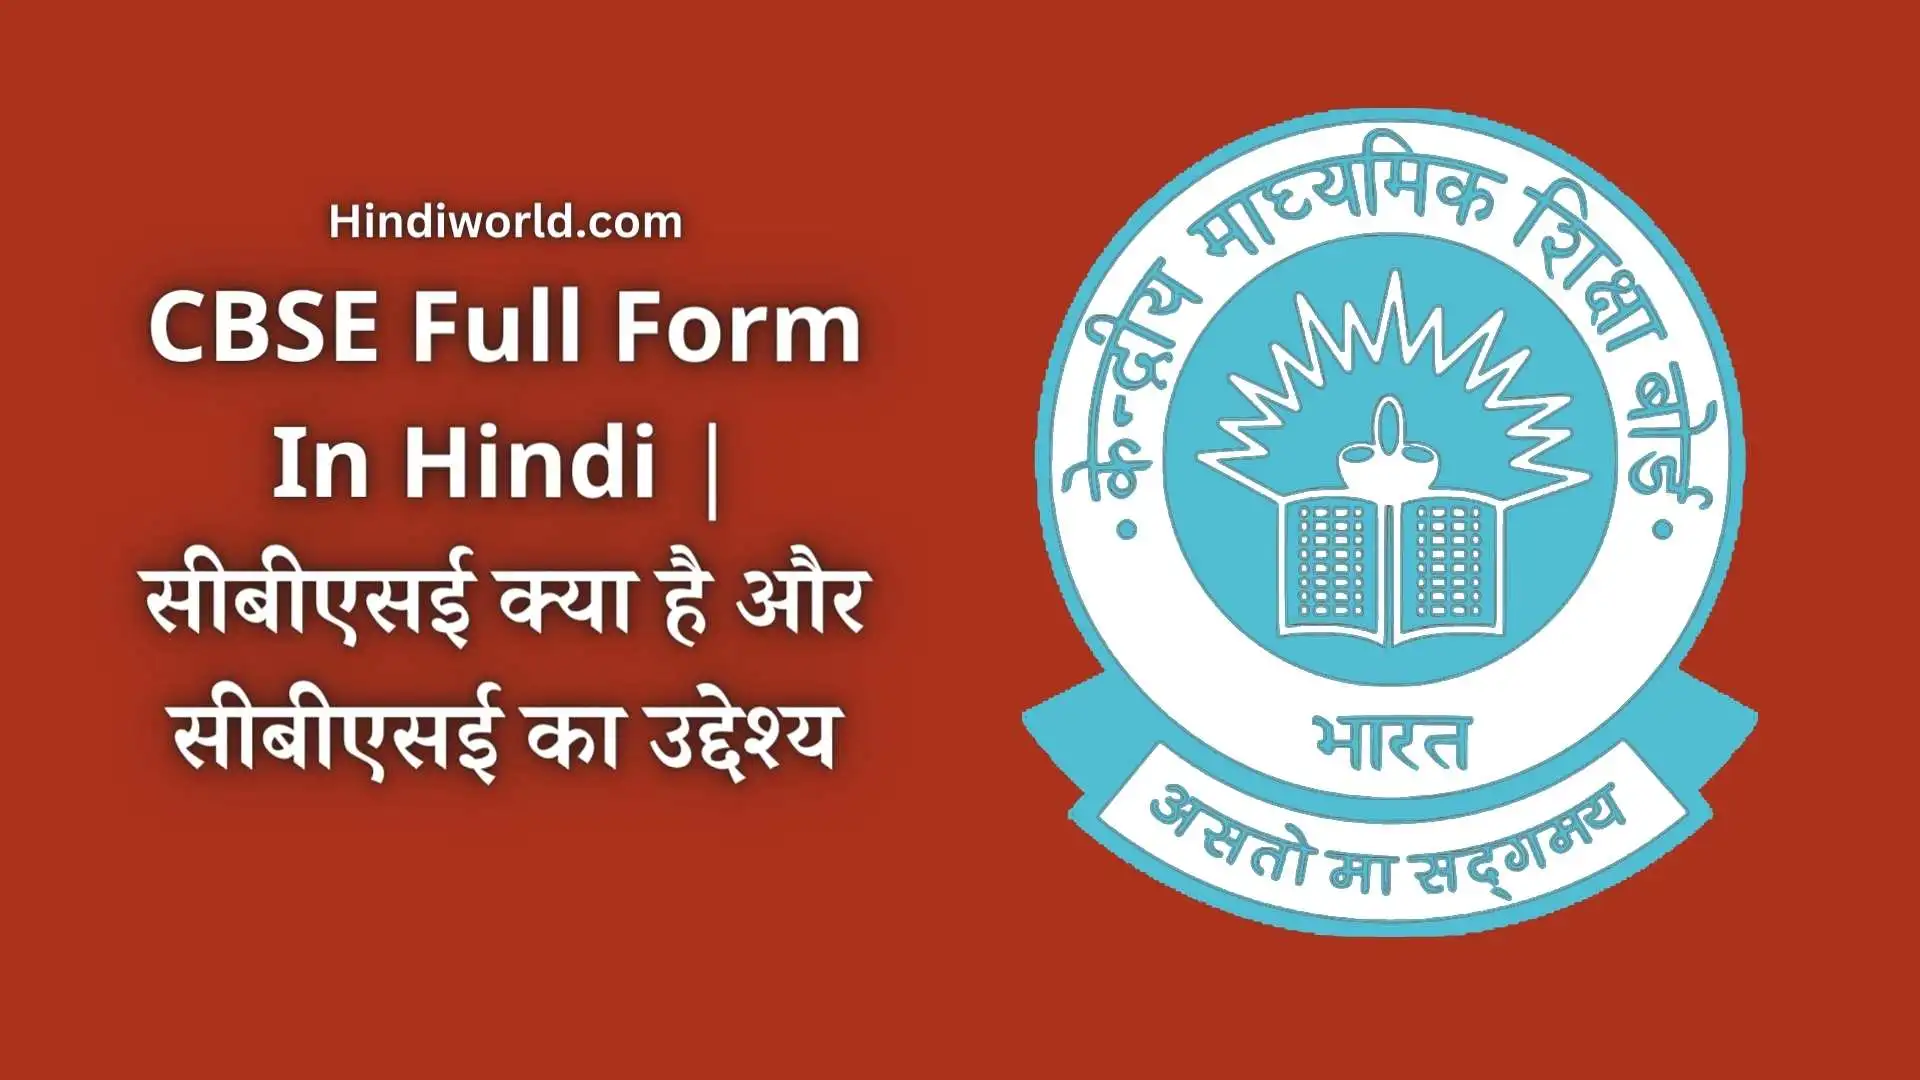 CBSE Full Form In Hindi